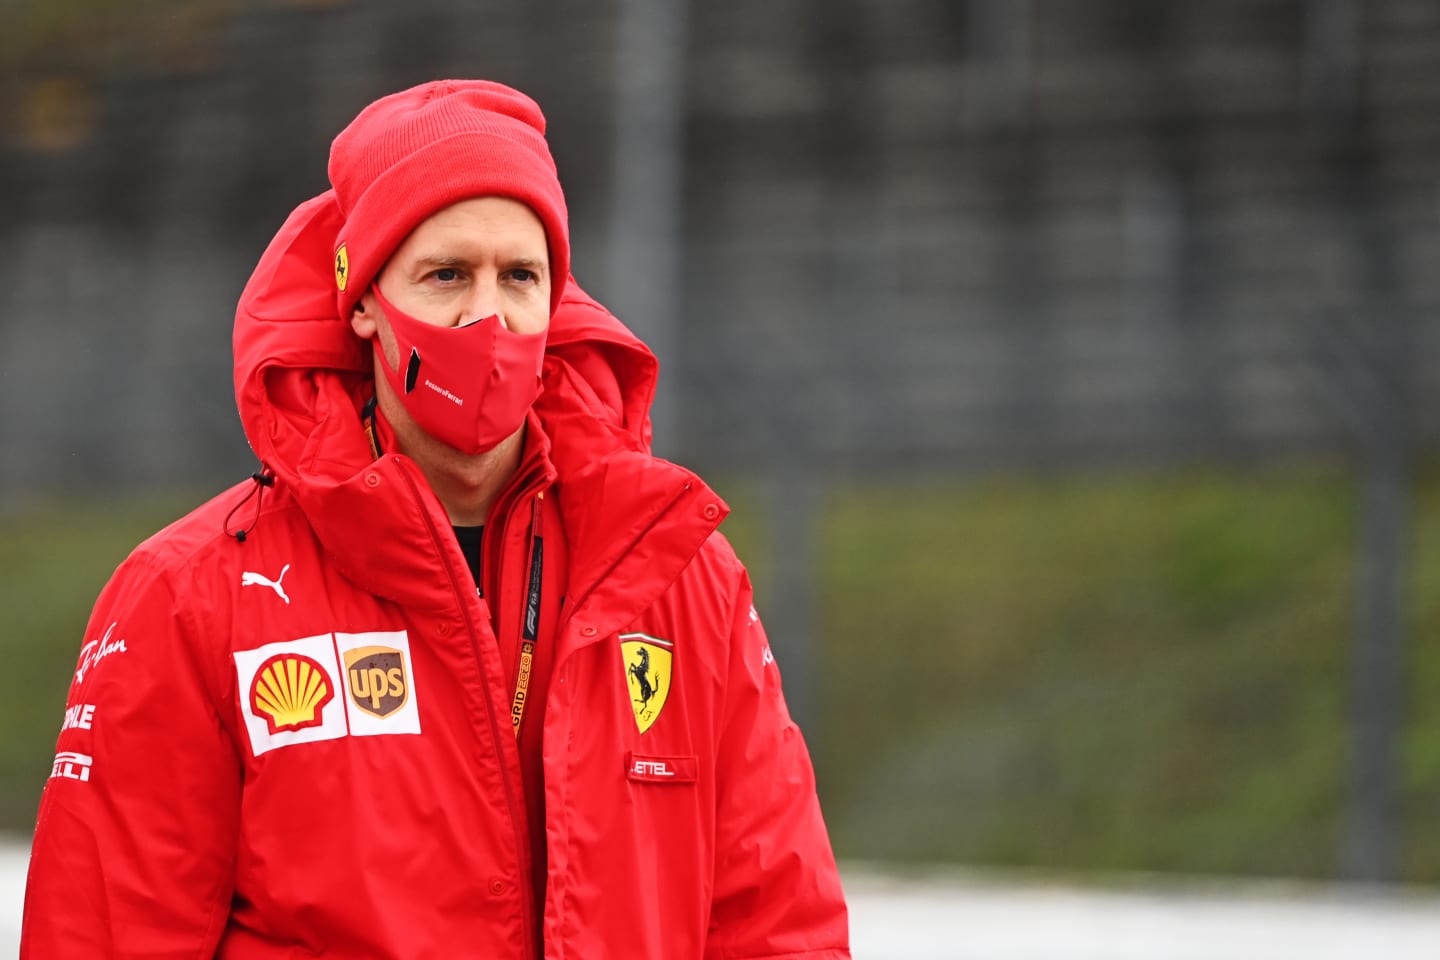 NUERBURG, GERMANY - OCTOBER 08: Sebastian Vettel of Germany and Ferrari walks the track during